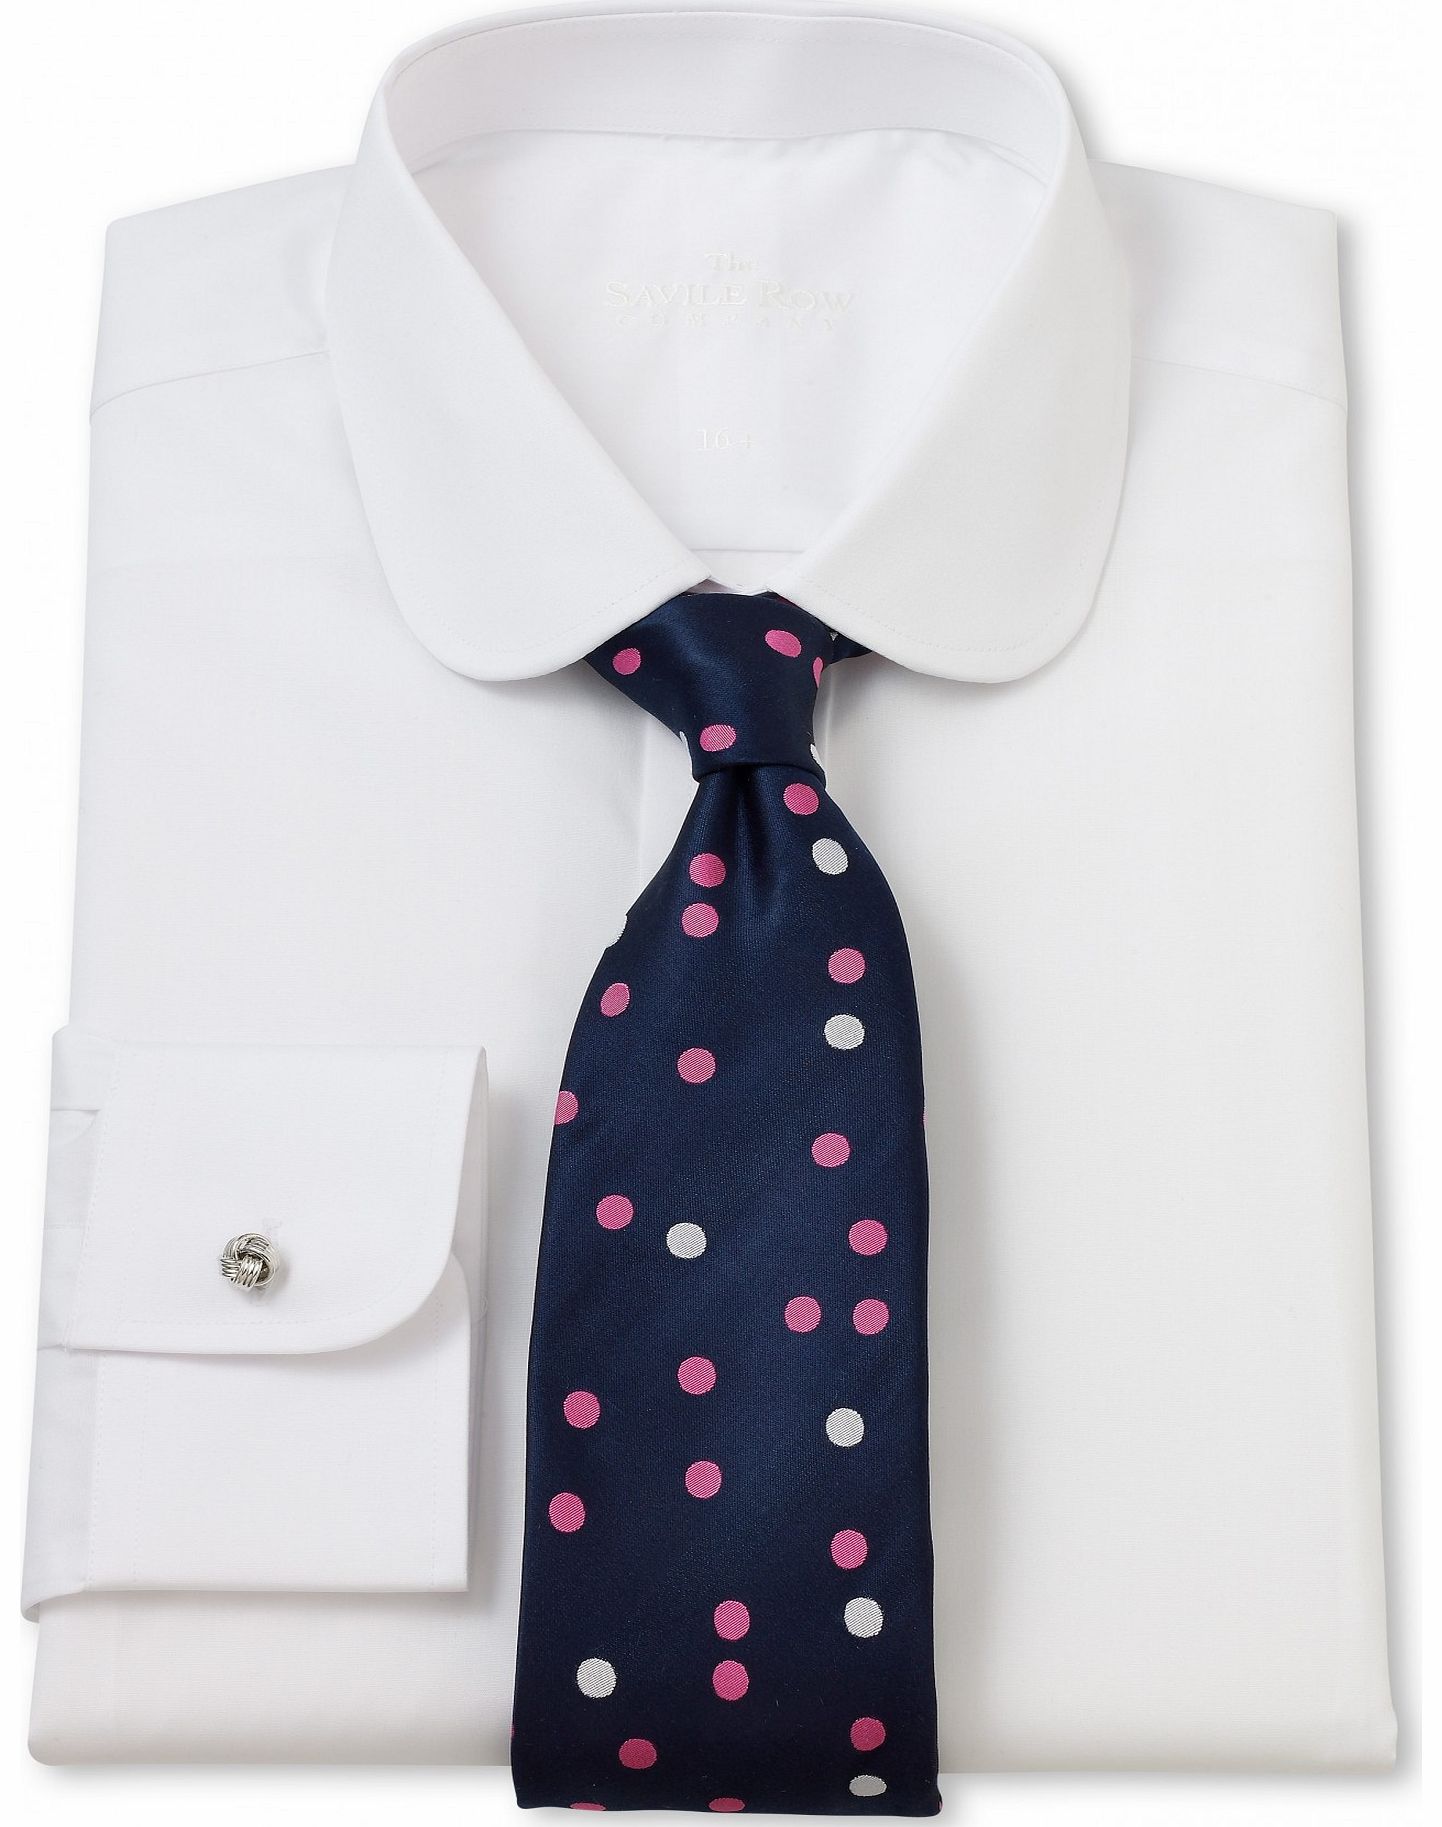 Savile Row Company White Round Collar Slim Fit Shirt 18`` Standard